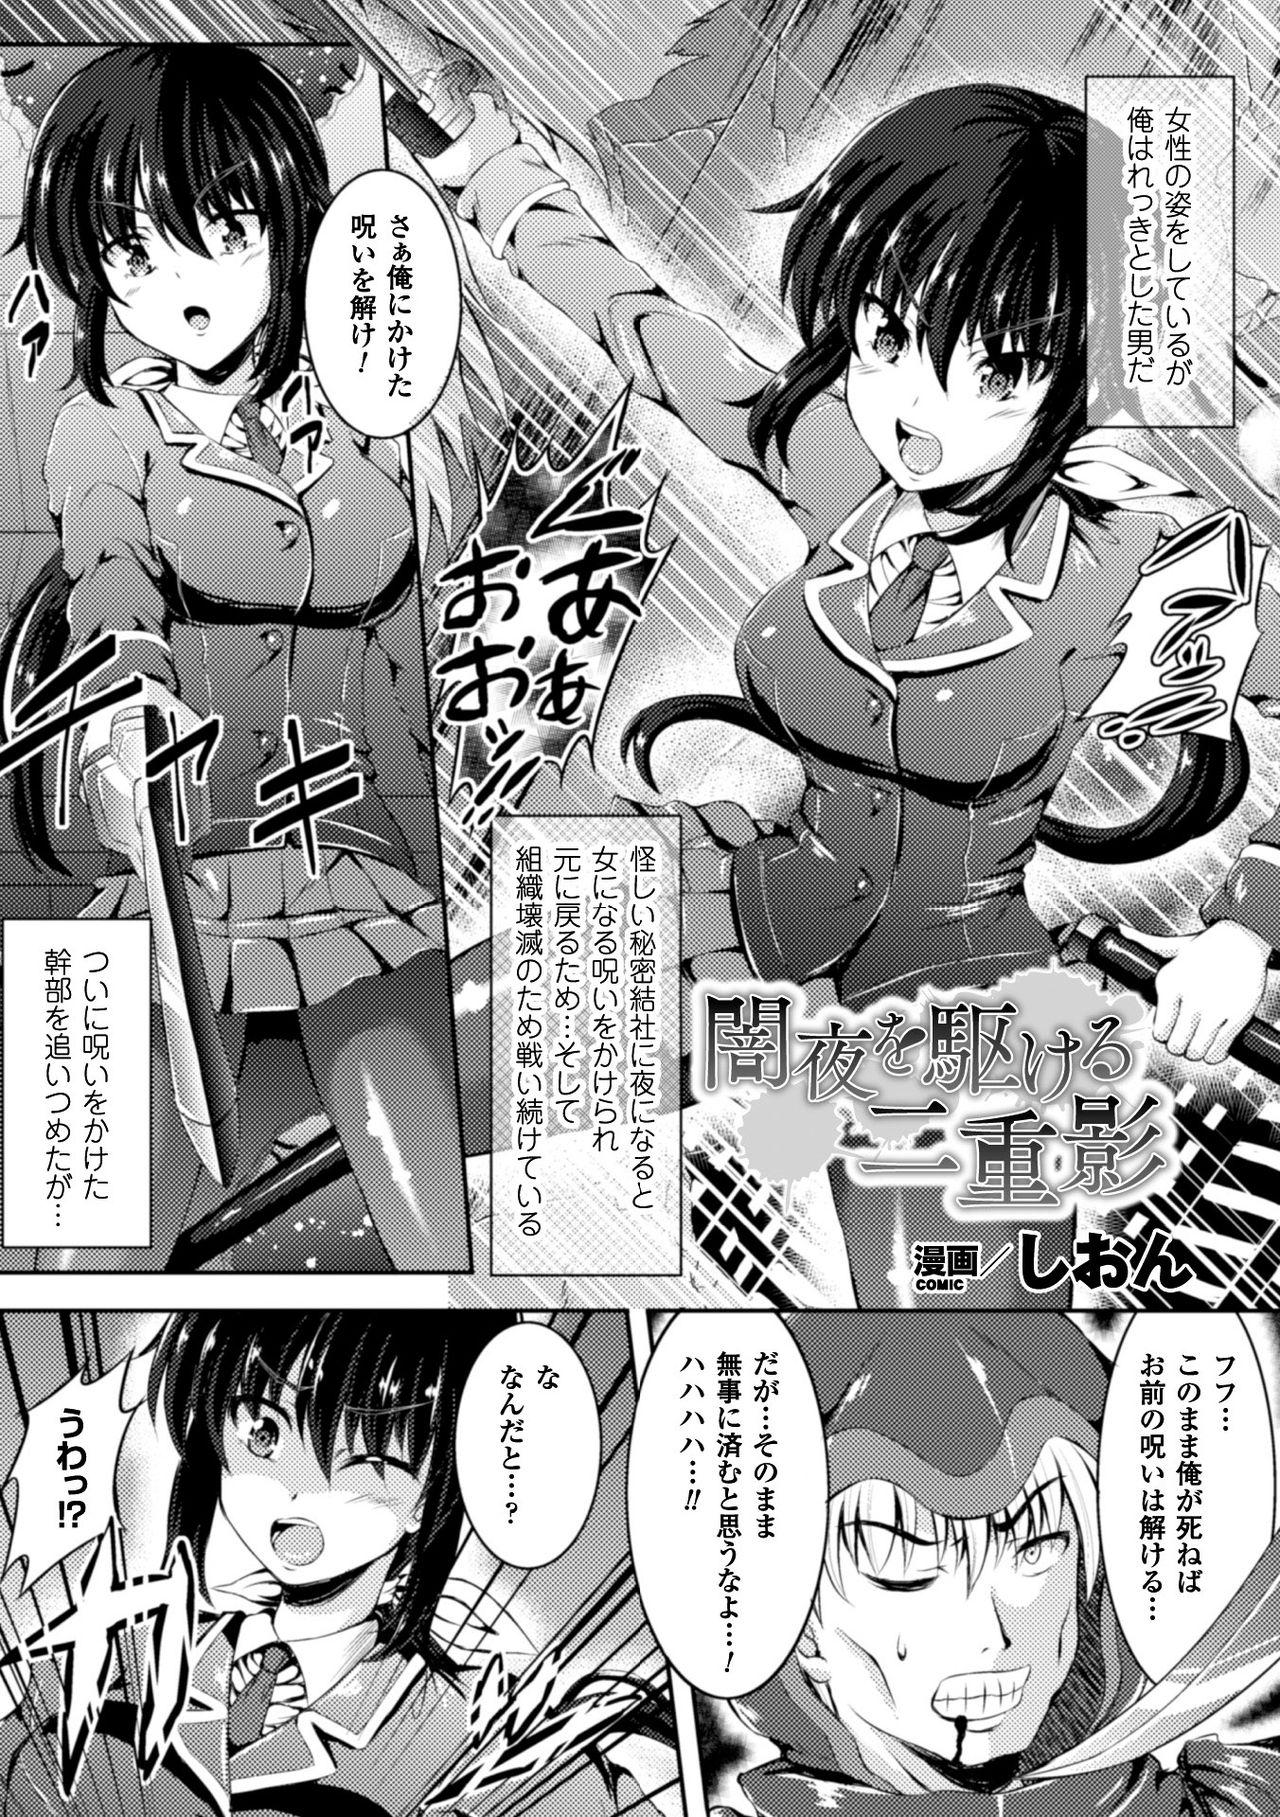 2D Comic Magazine TS Jibun Heroine mou Hitori no Ore ga Erosugite Gaman Dekinee! Vol. 1 2